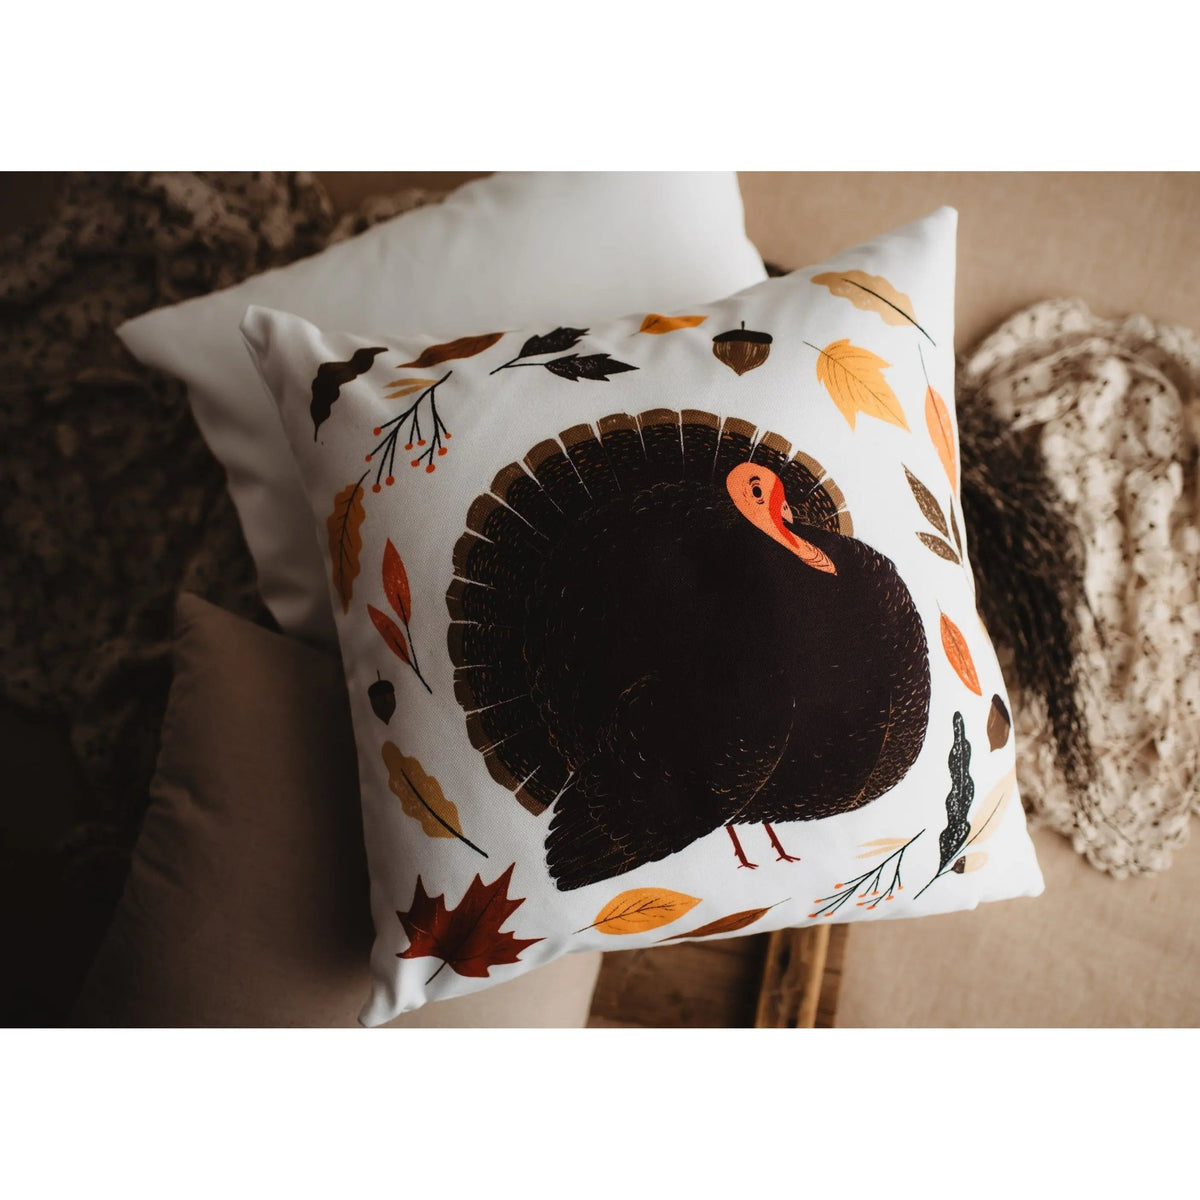 Turkey Throw Pillow | Pillow Cover